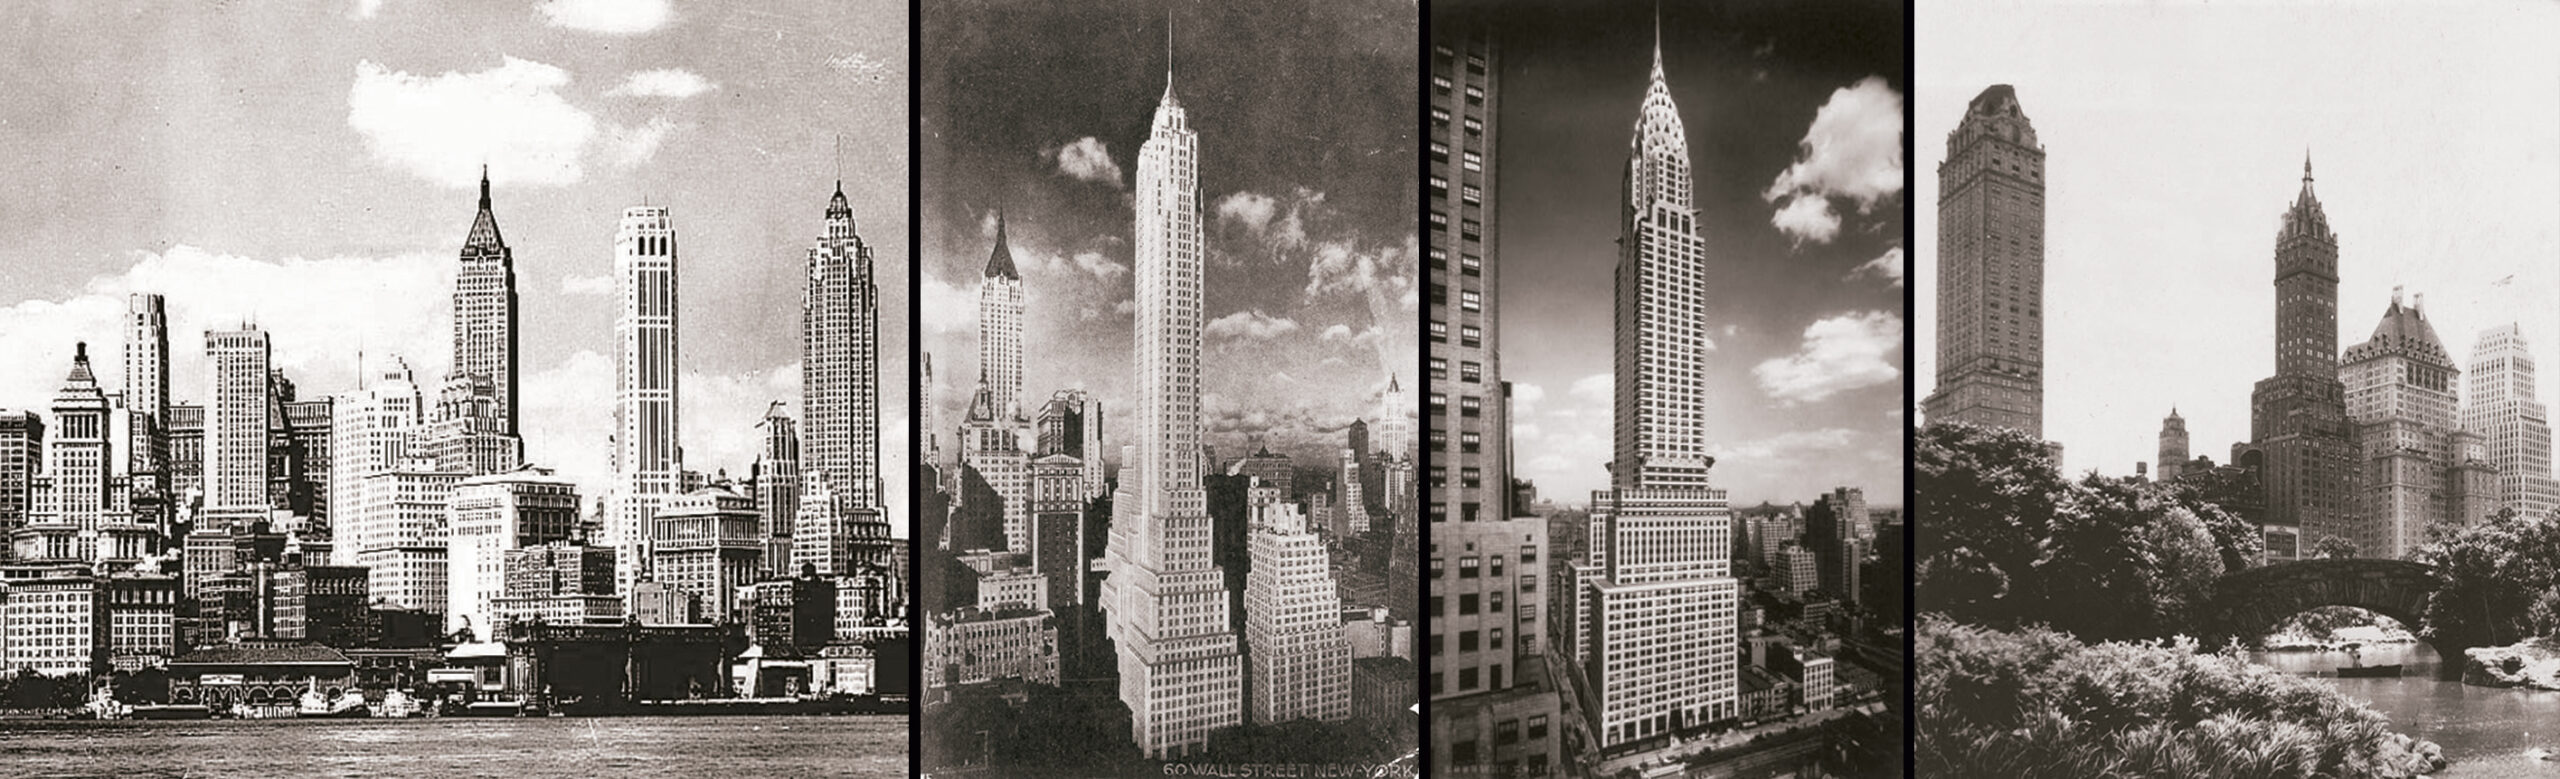 Left: Lower Manhattan Skyline, 1930s. Center-left: 70 Pine Street, 1932. Center-right: Chrysler Building, 1930s. Collection of The Skycraper Museum. Right: Hotels on Central Park, 1930s.
Collection of the Skyscraper Museum